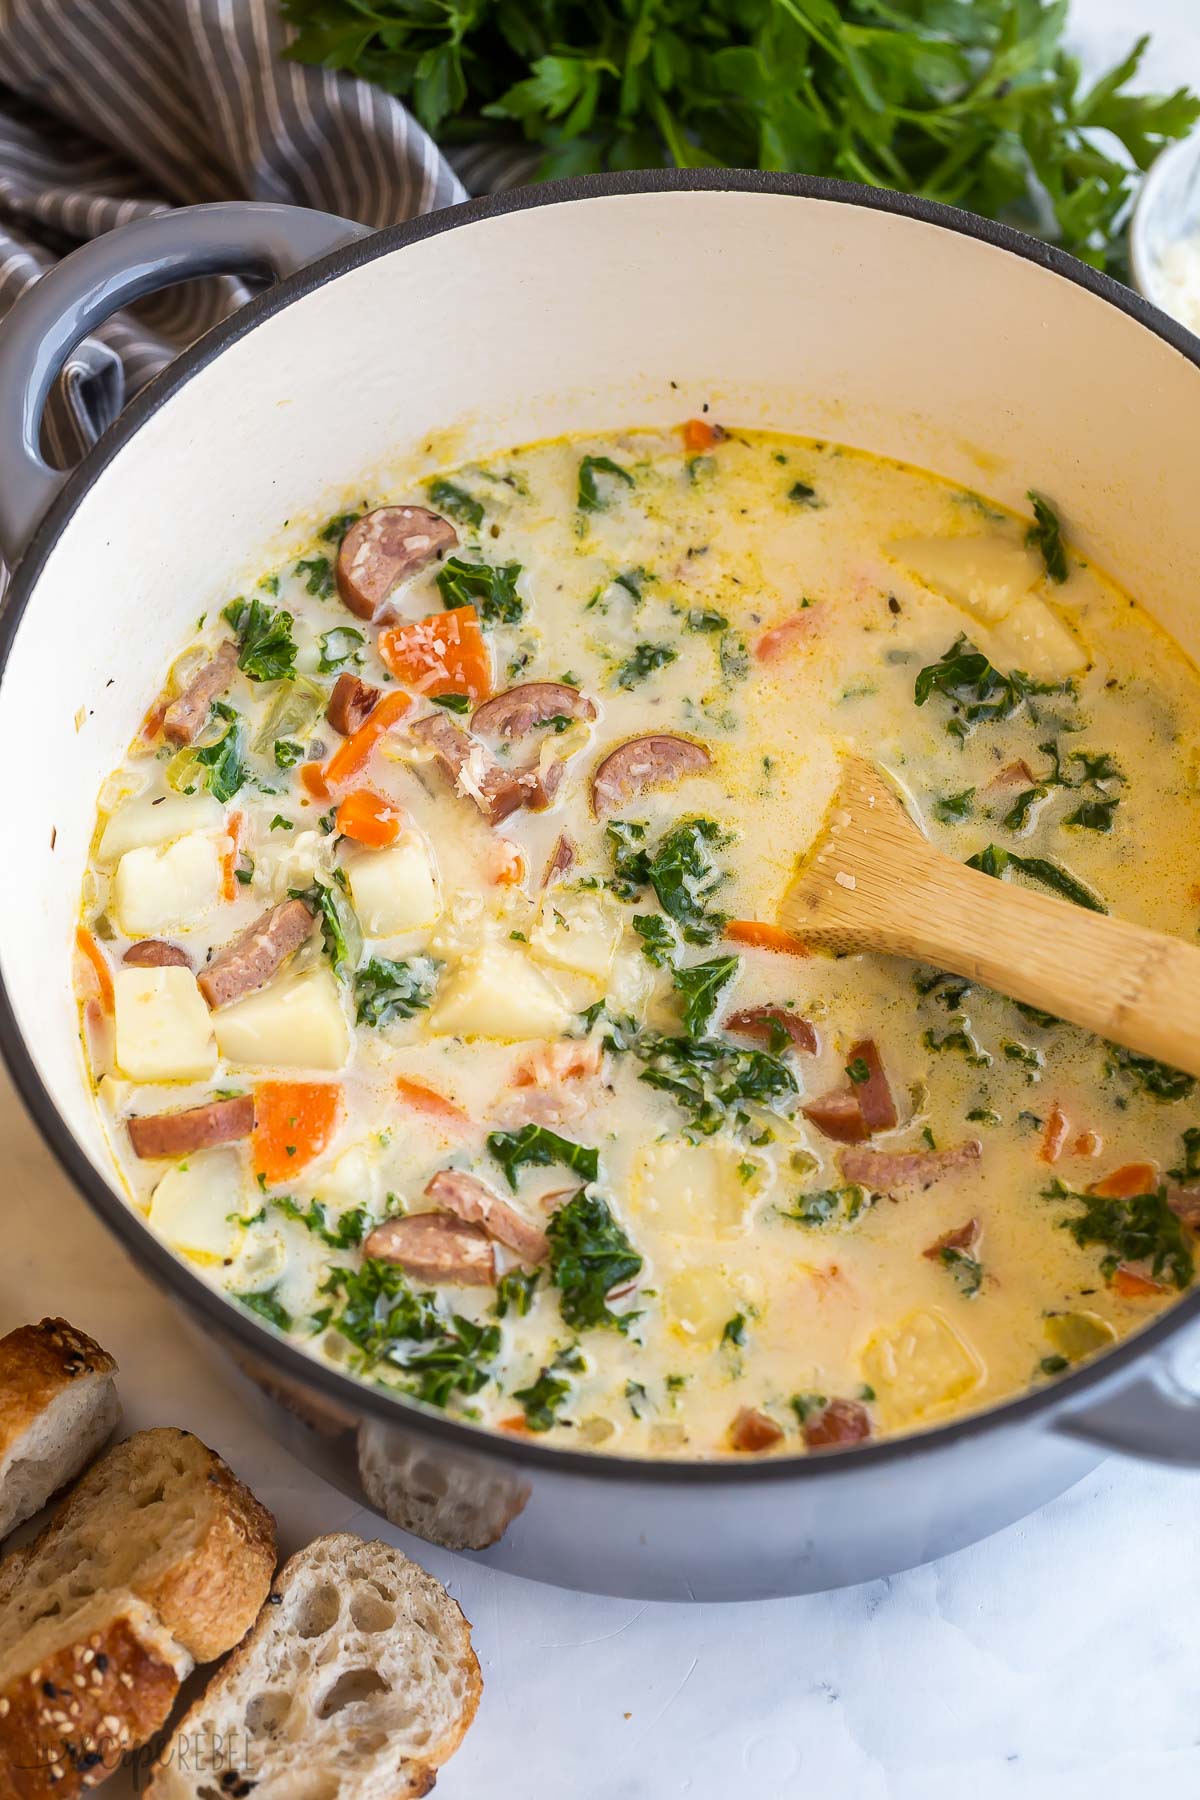 Sausage Potato Soup with Kale - The Recipe Rebel